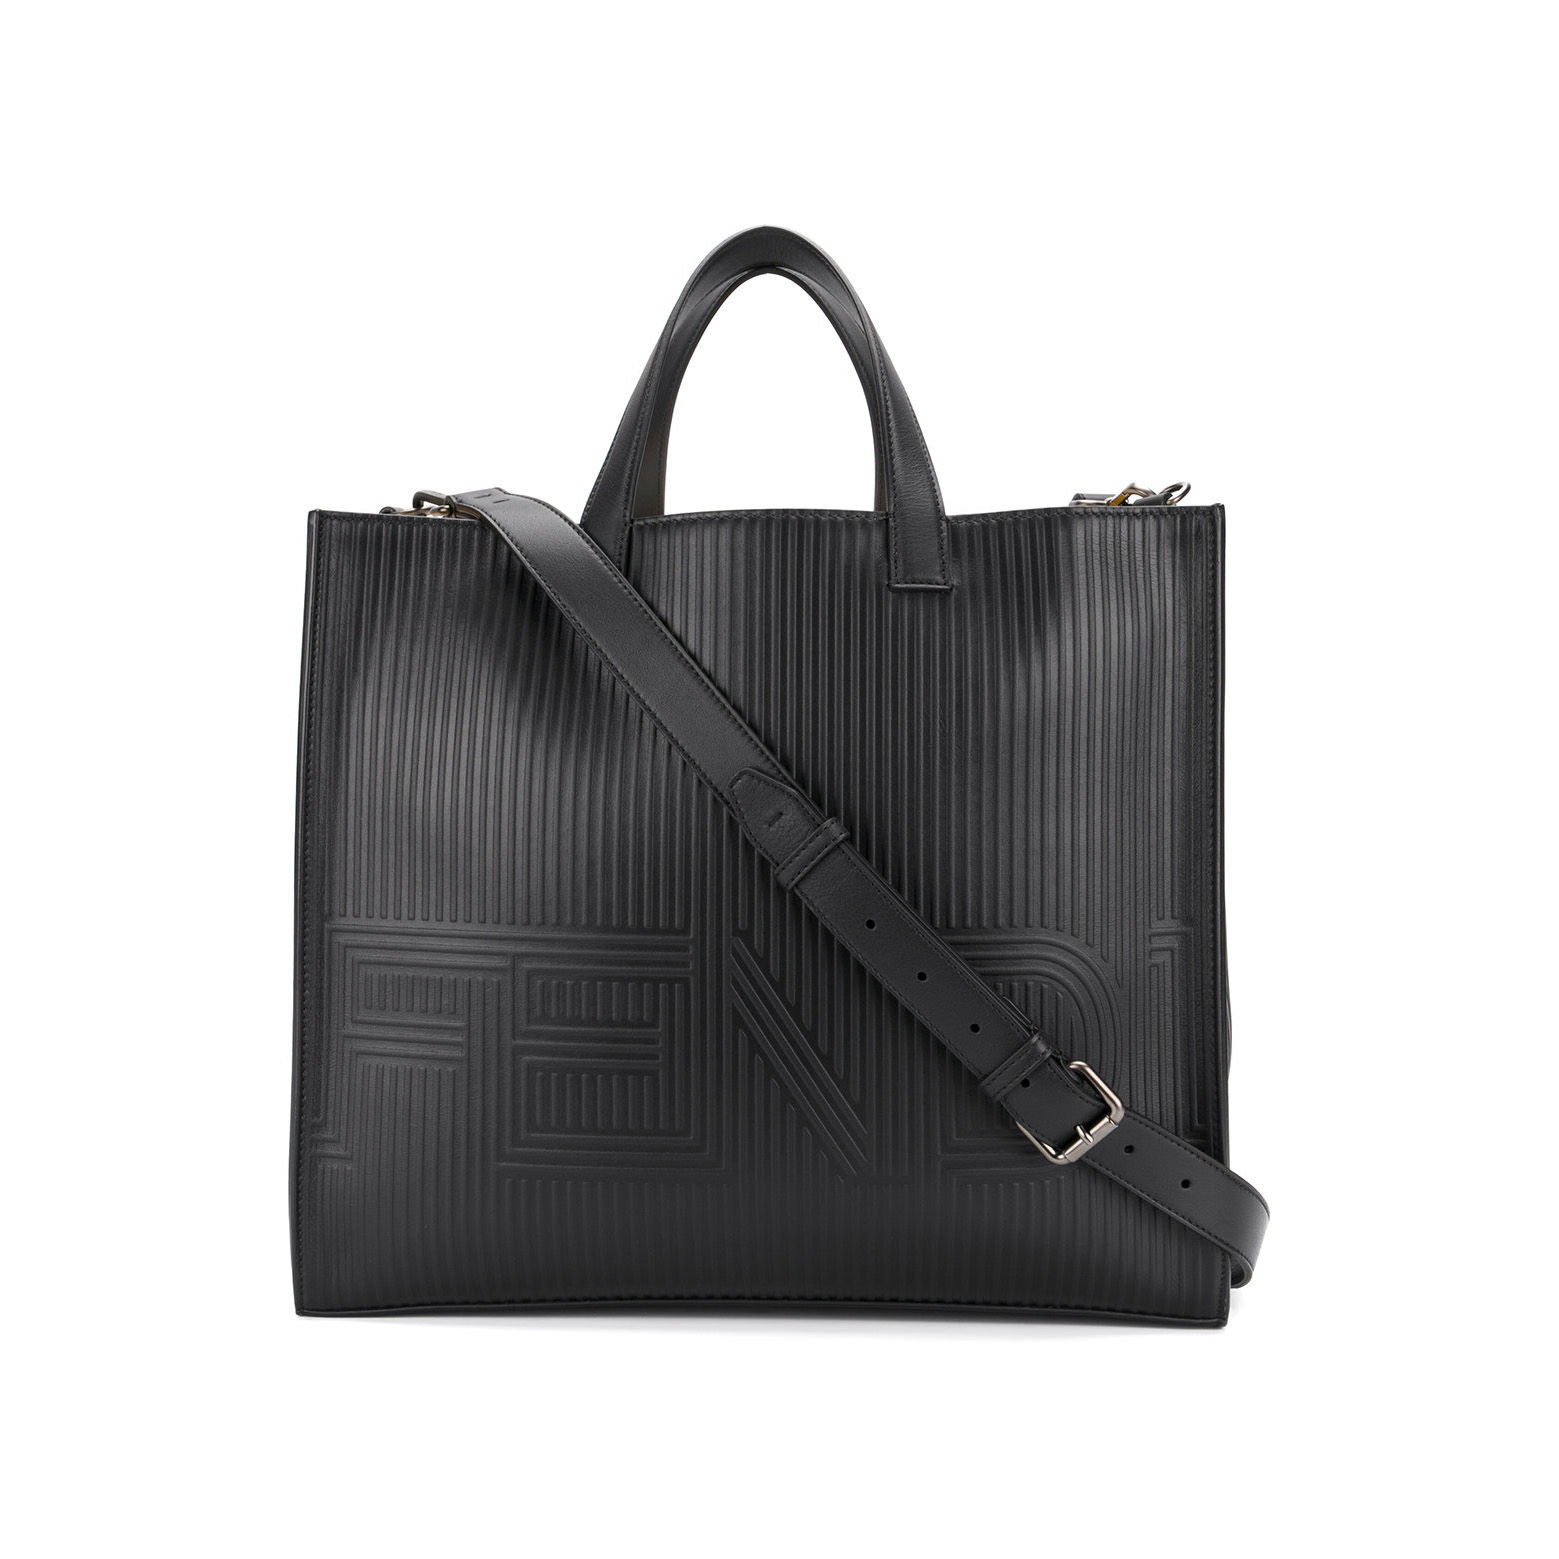 Fendi black leather tote bag